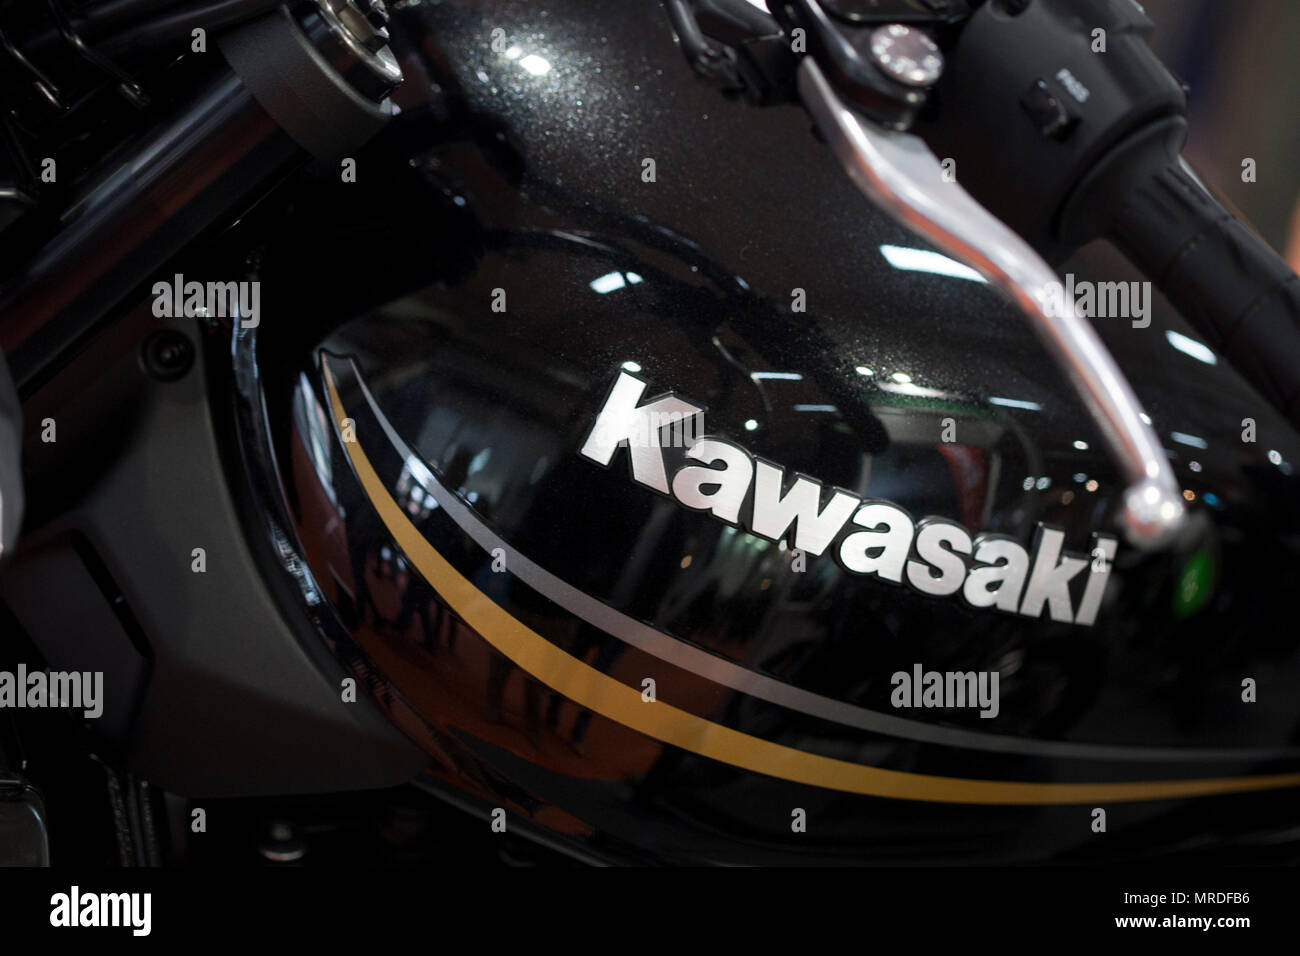 Kawasaki logo on a motorcycle Stock Photo